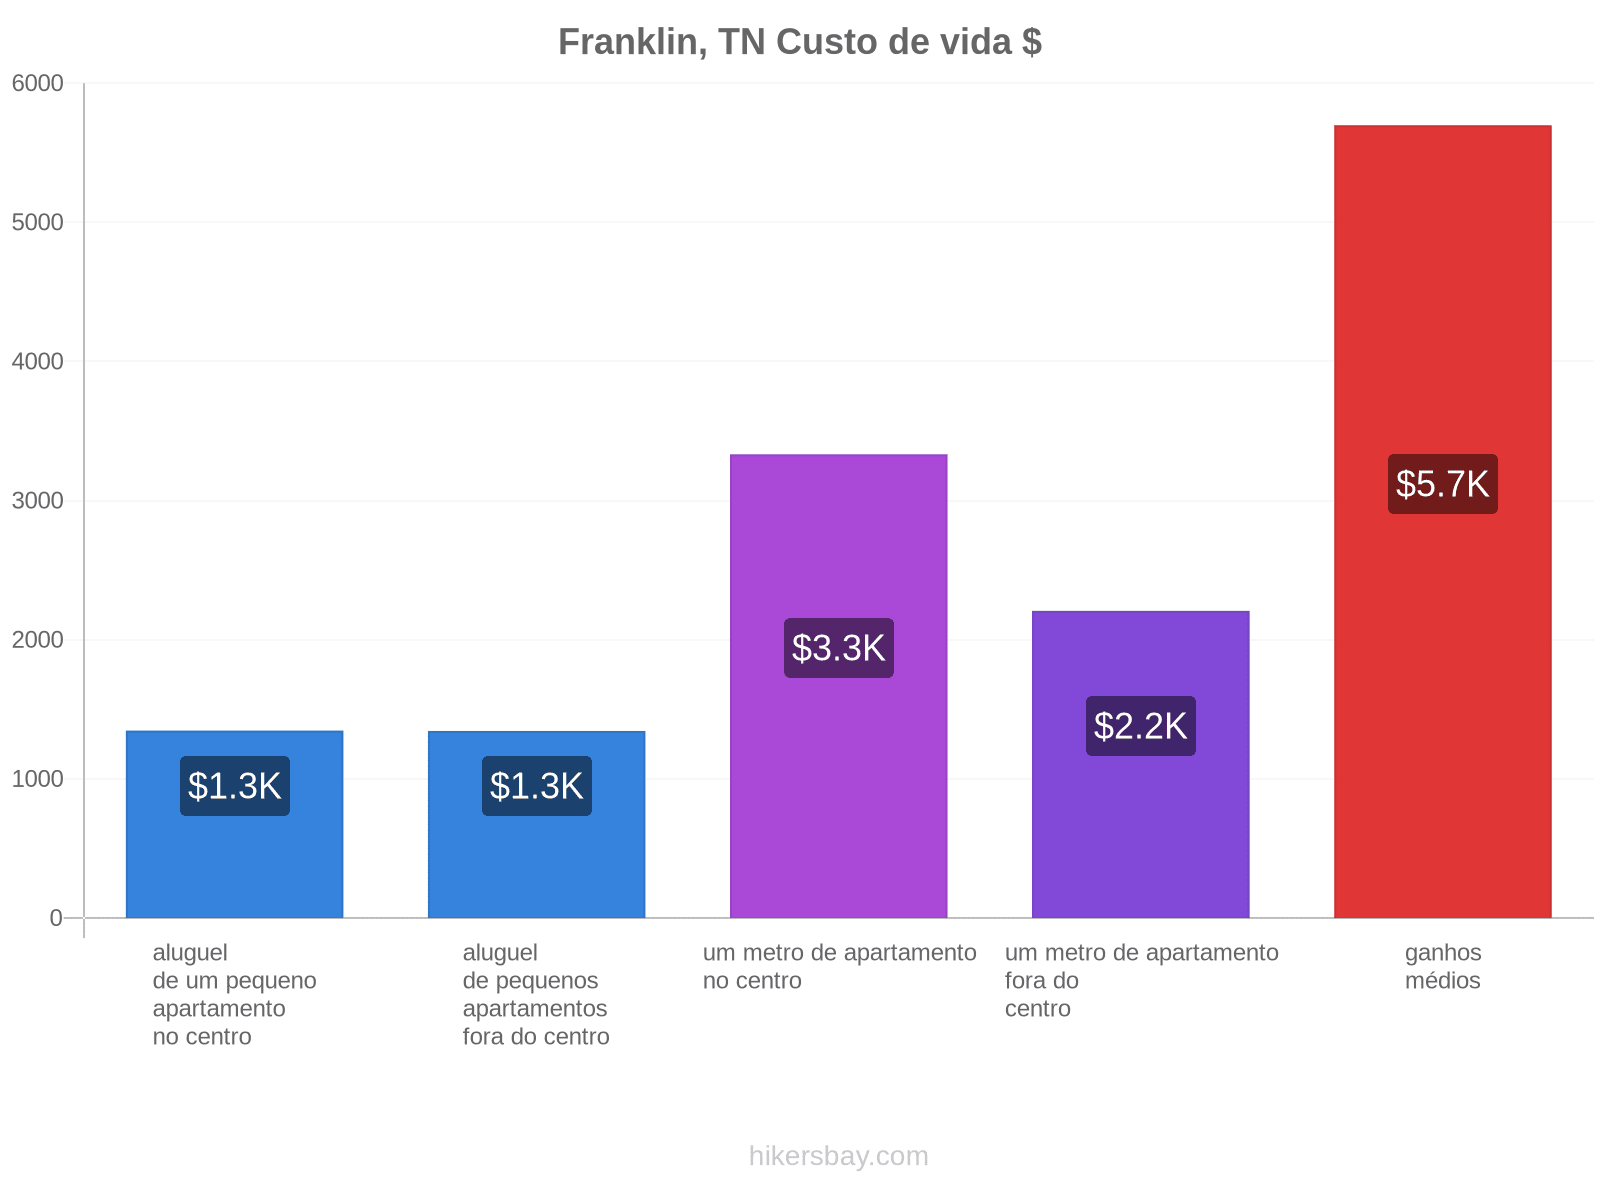 Franklin, TN custo de vida hikersbay.com